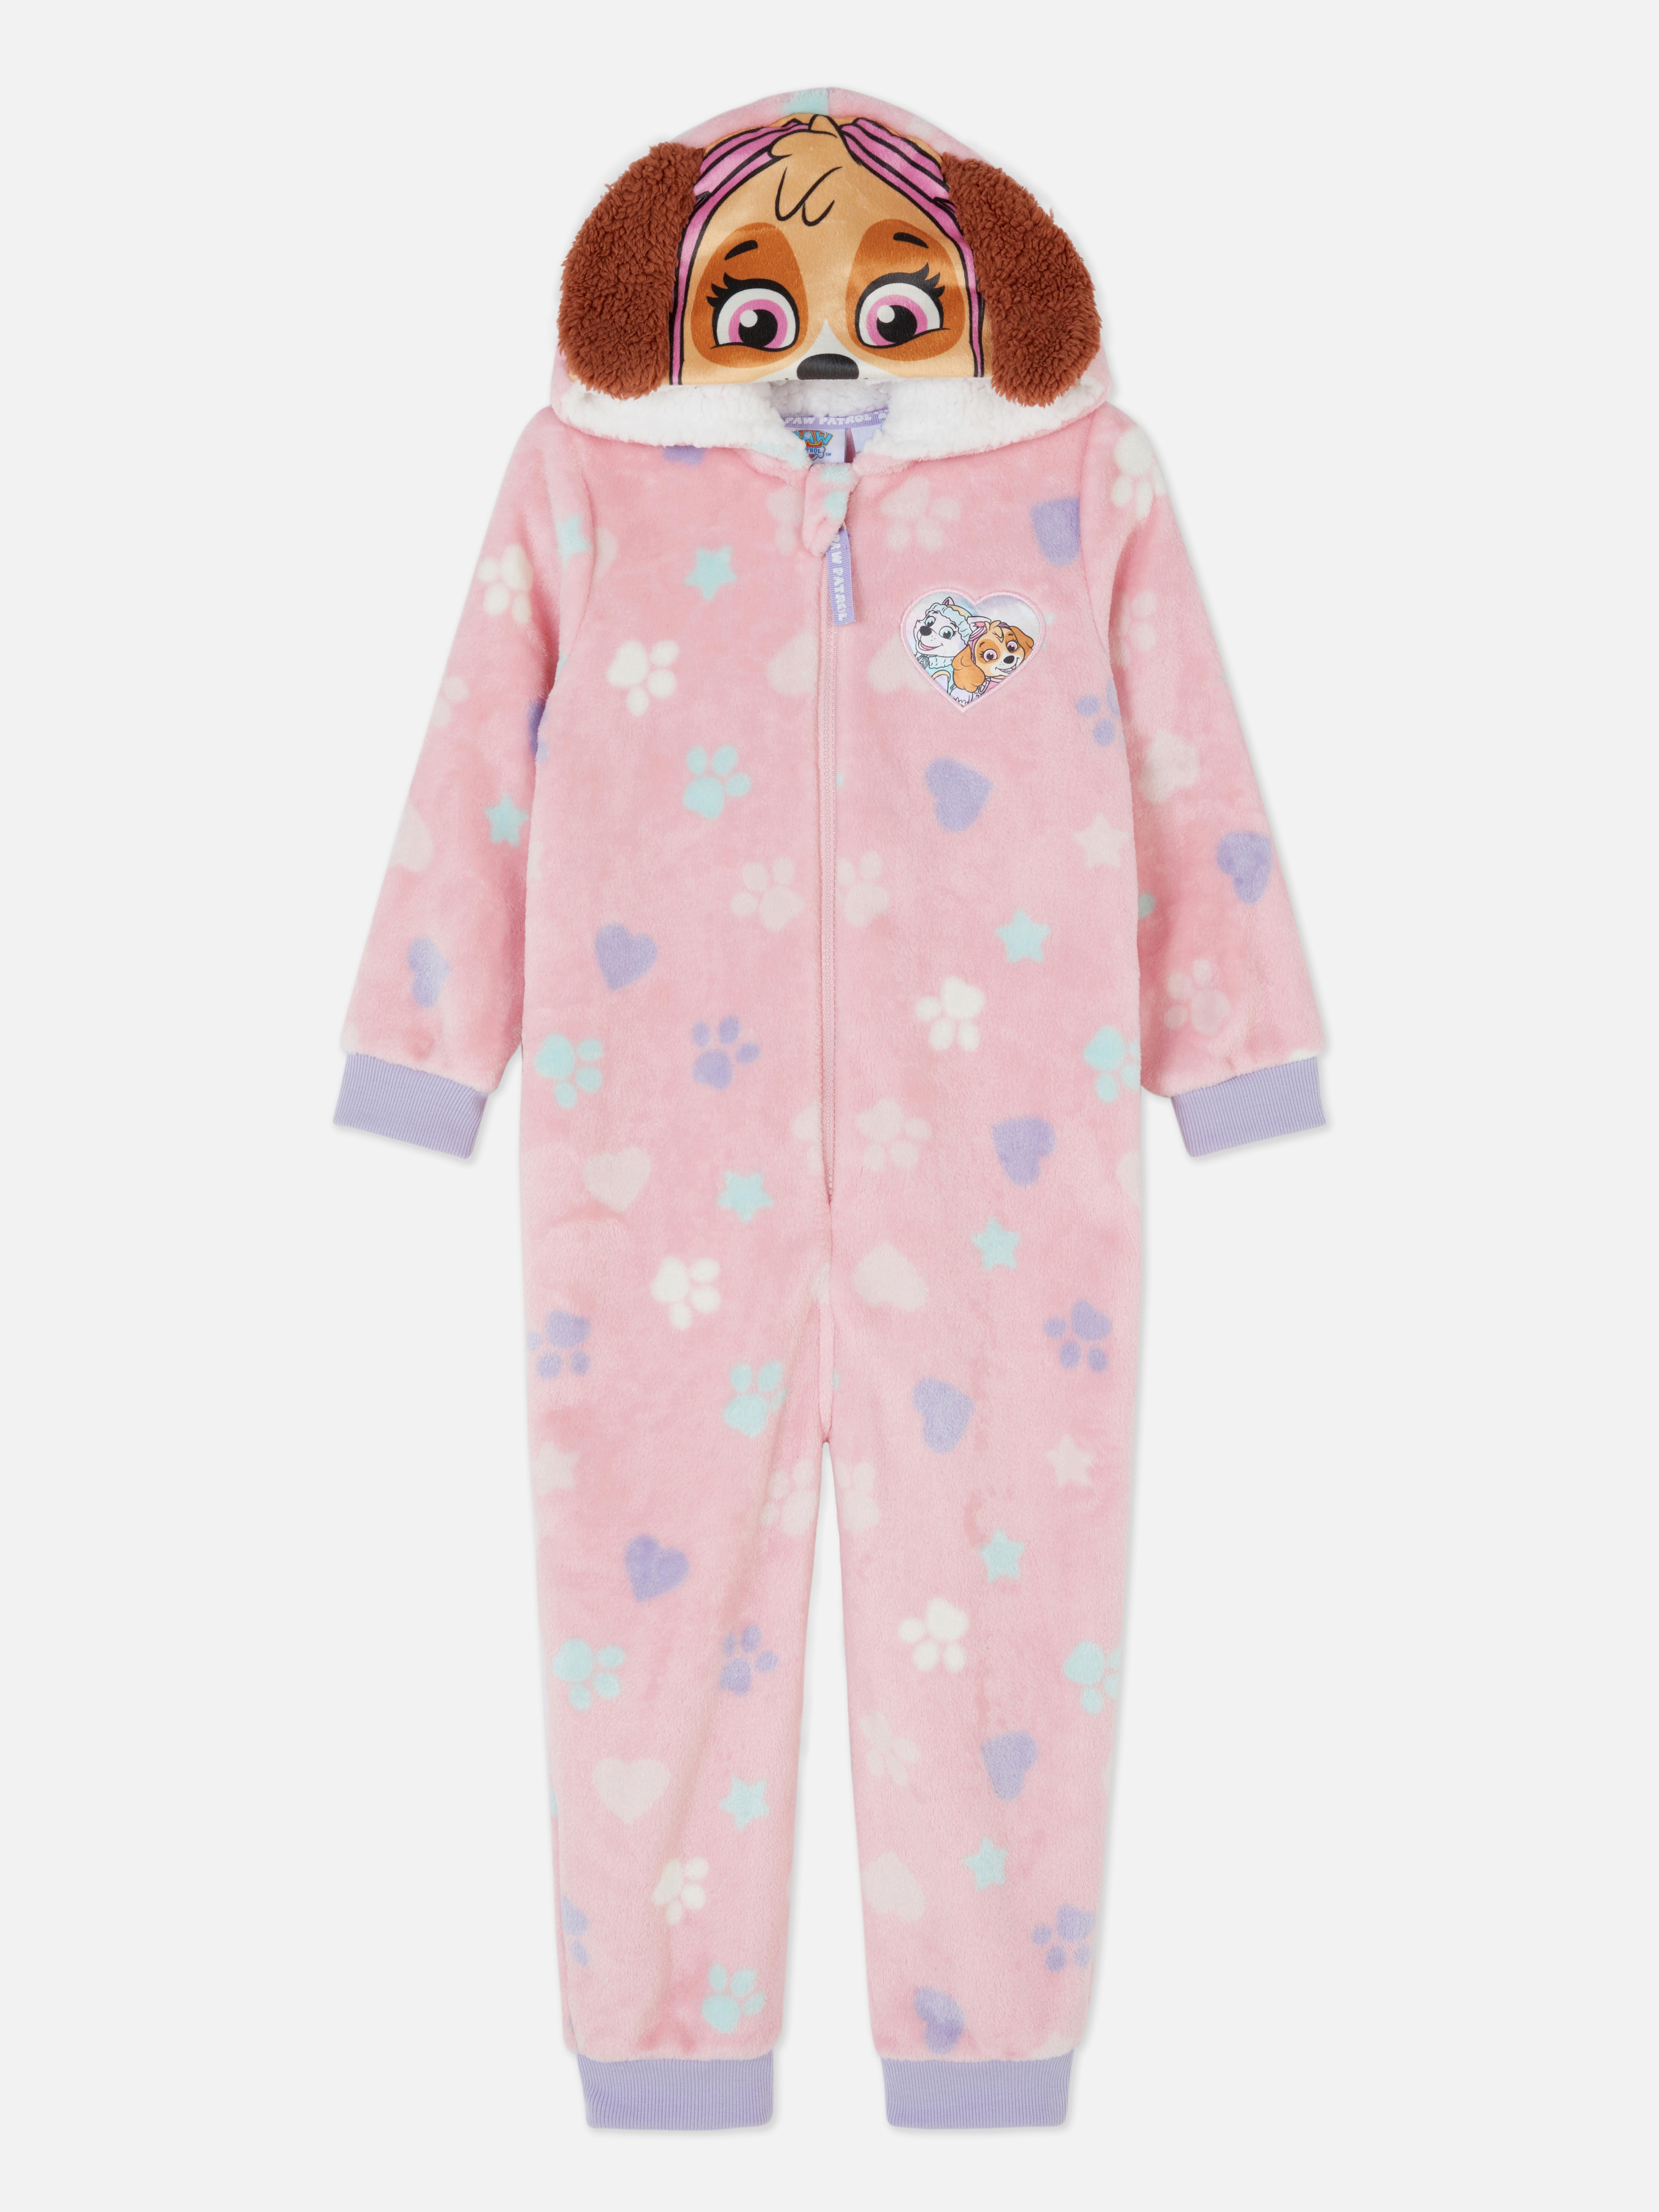 Mono de pijama de La Patrulla | para niños | Moda para niños | Ropa para niños | Todos los productos Primark | Primark España